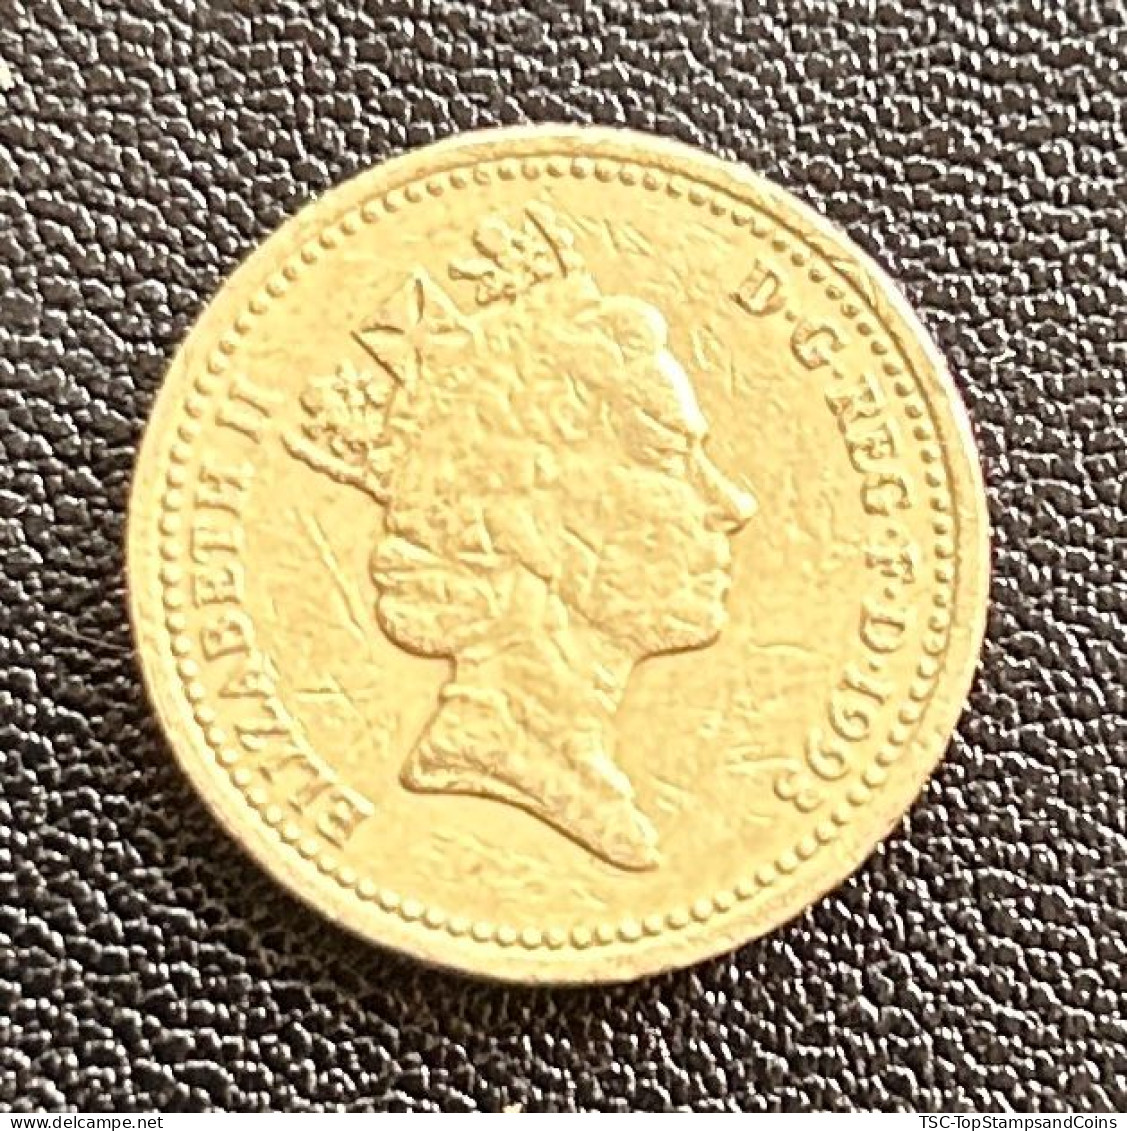 $$GB893 - Queen Elizabeth II - 1 Pound Coin - 3rd Portrait - Royal Arms - Great-Britain - 1993 - 1 Pound